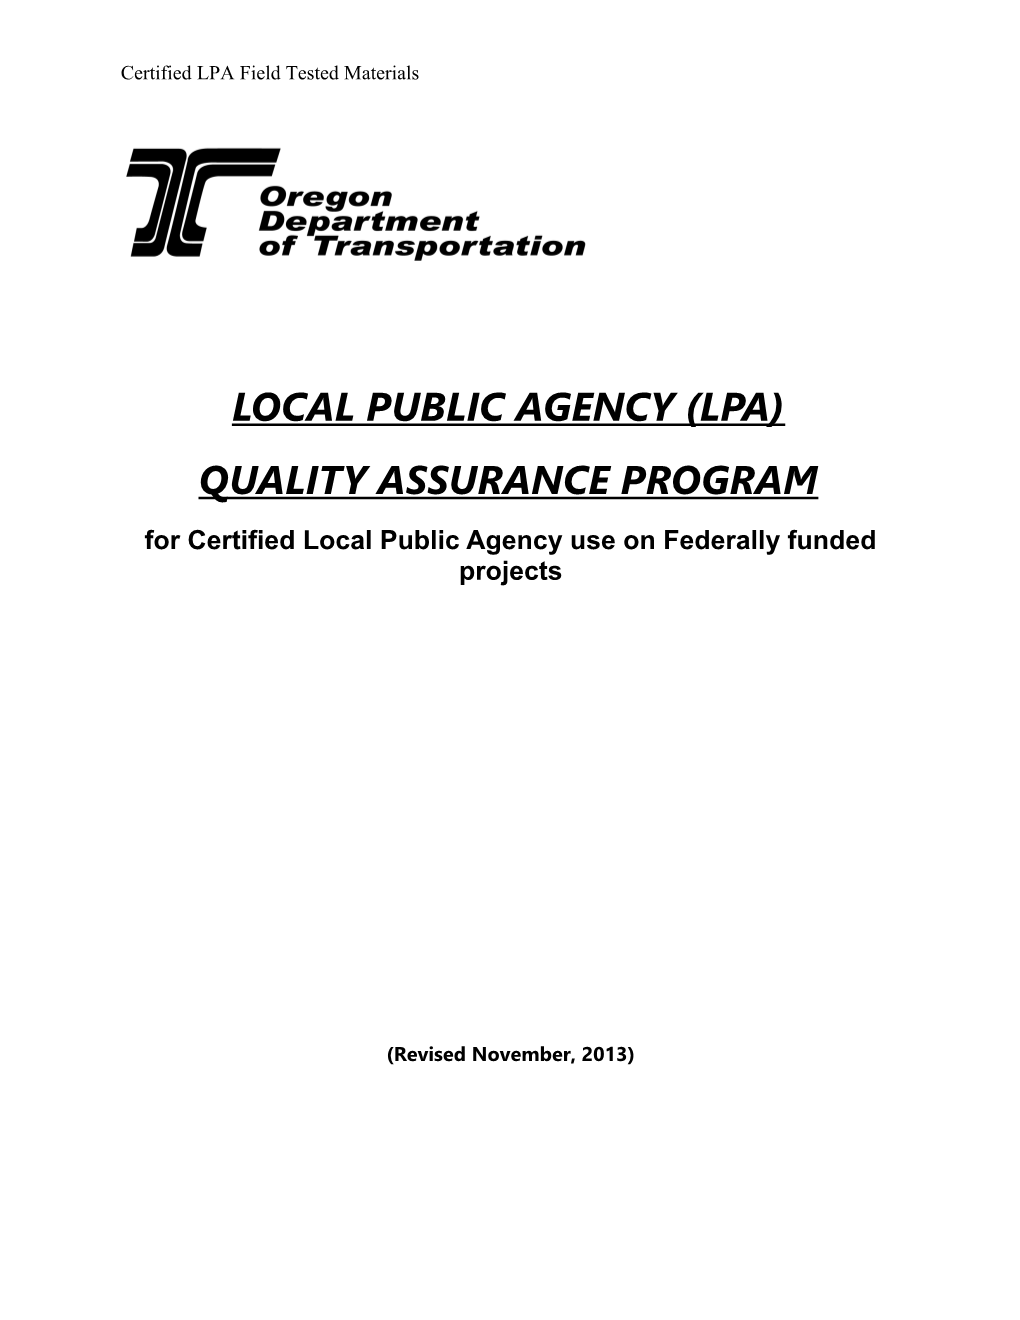 Local Public Agency (Lpa)